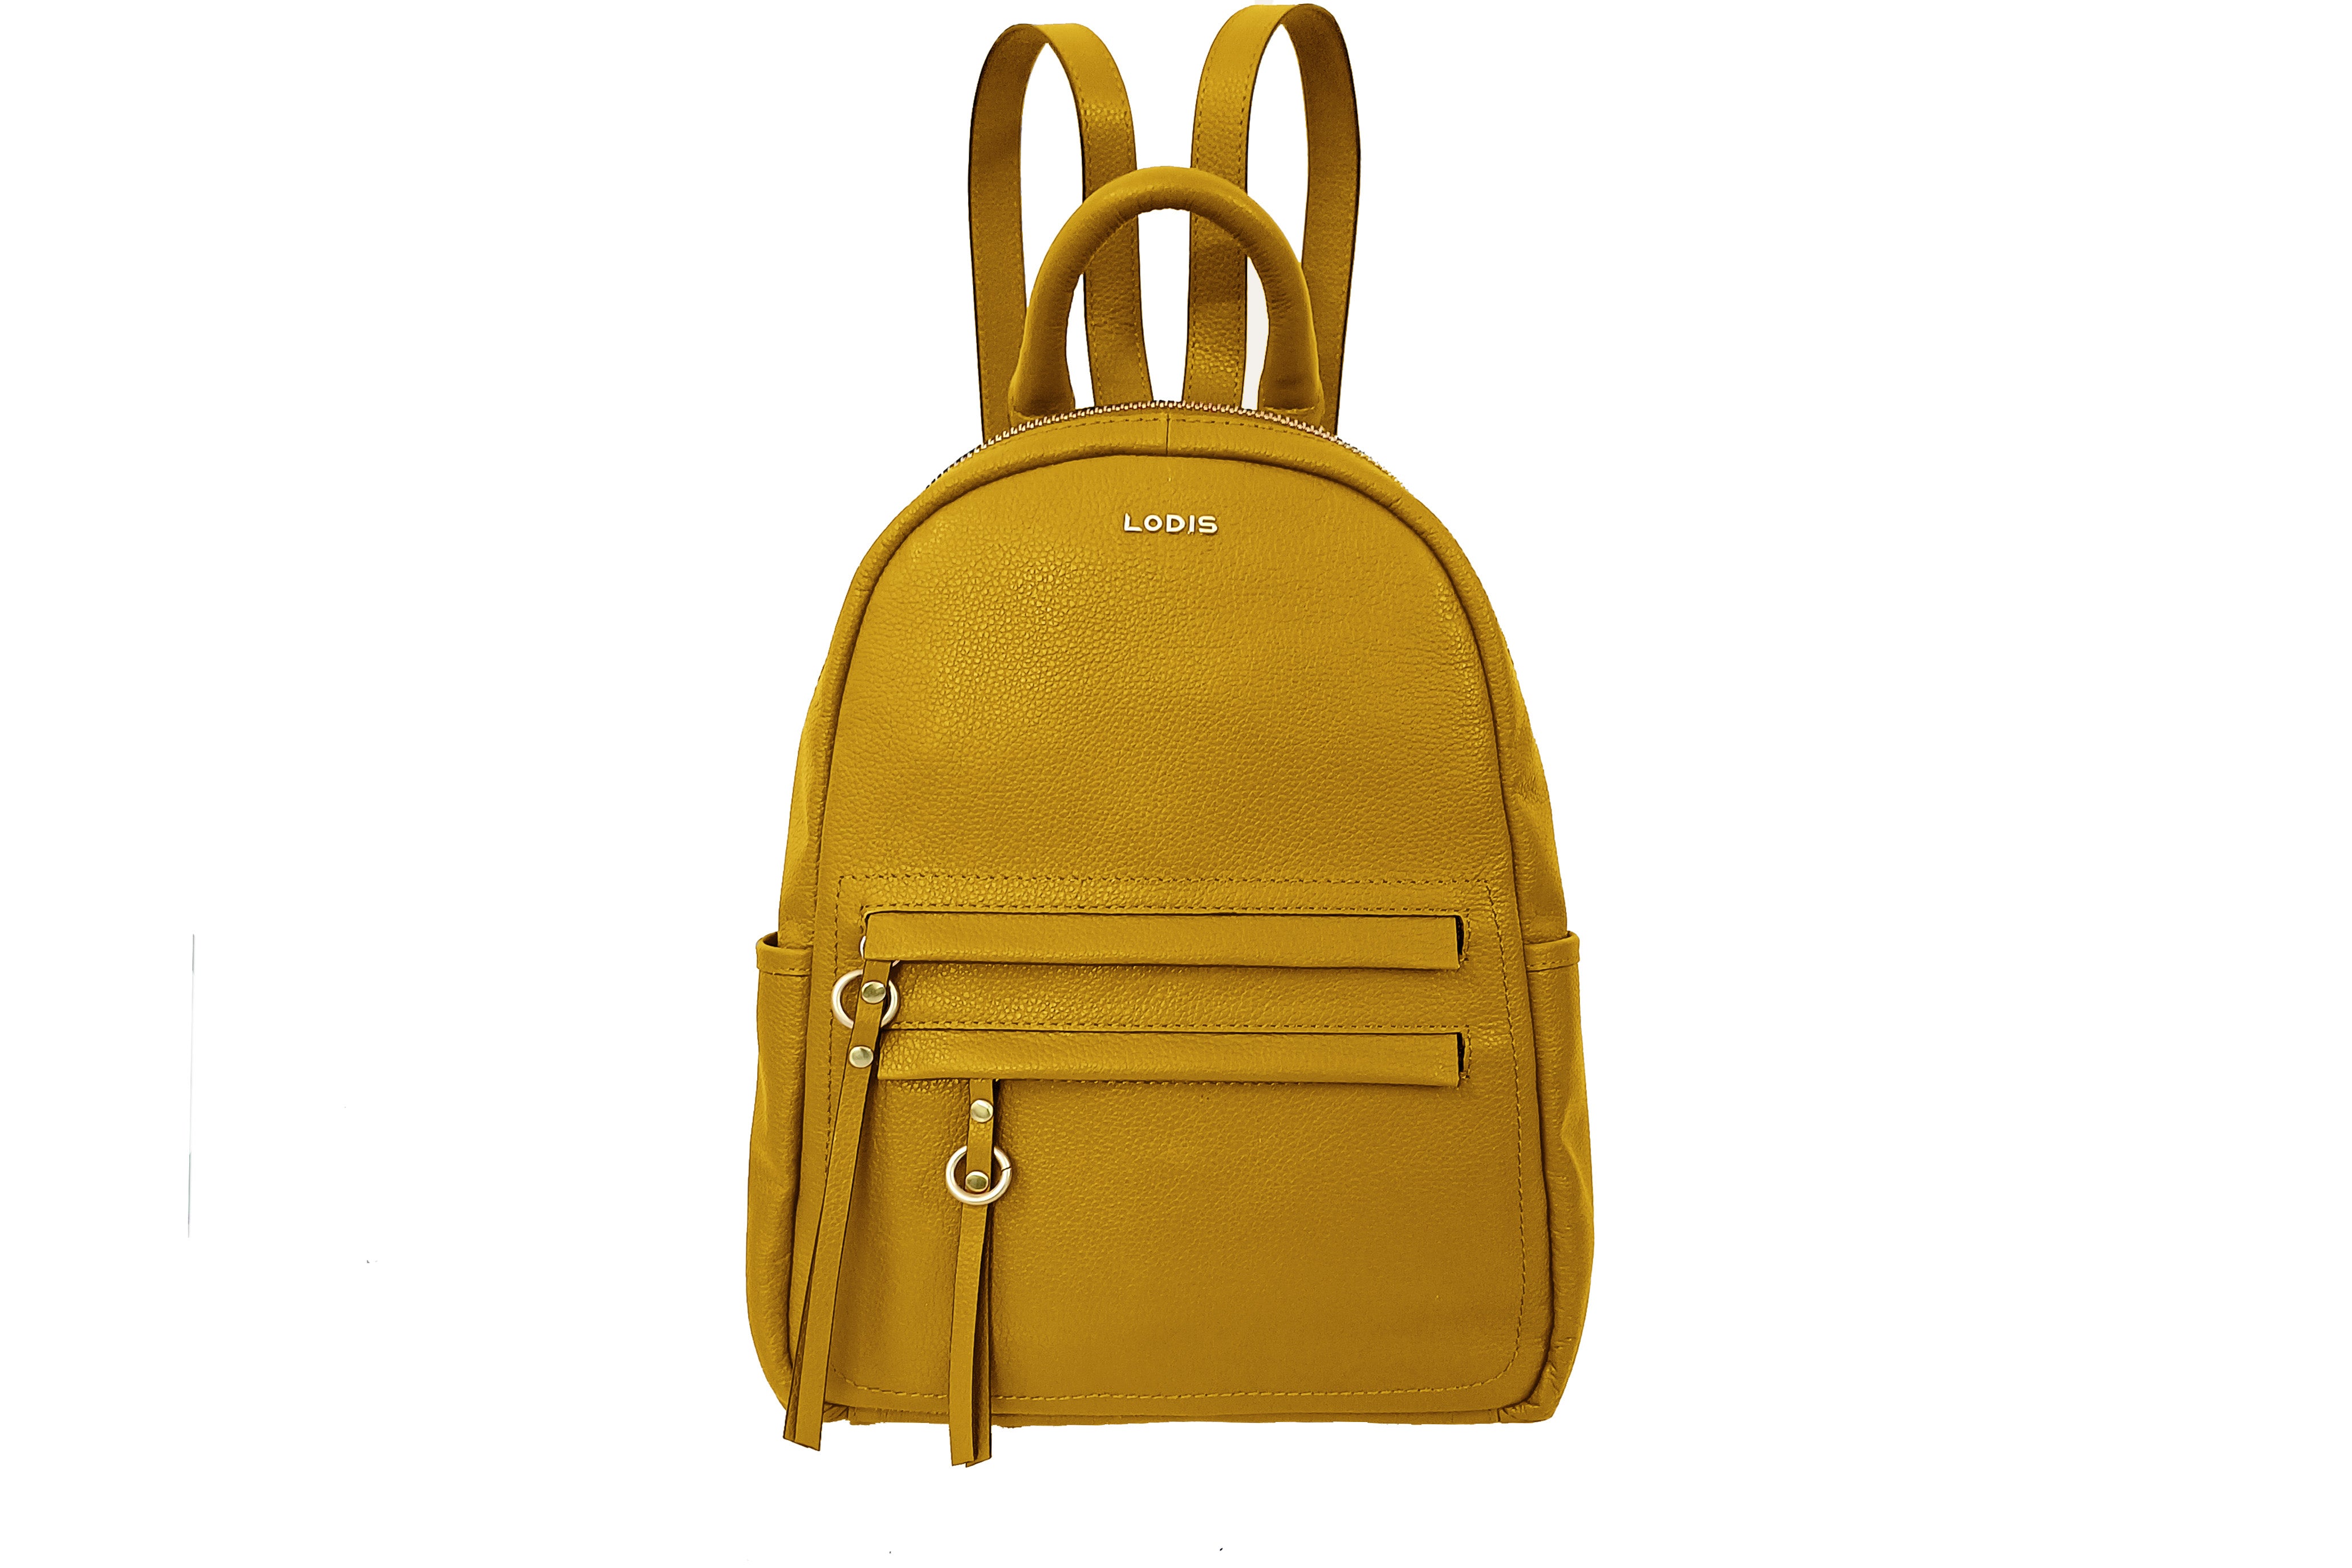 HotStyle BESTIE Mini Backpack Purse, Multiple Colors and Patterns, Small  Sized | Mochila pañalera, Bolso mochila, Mochilas de cuero